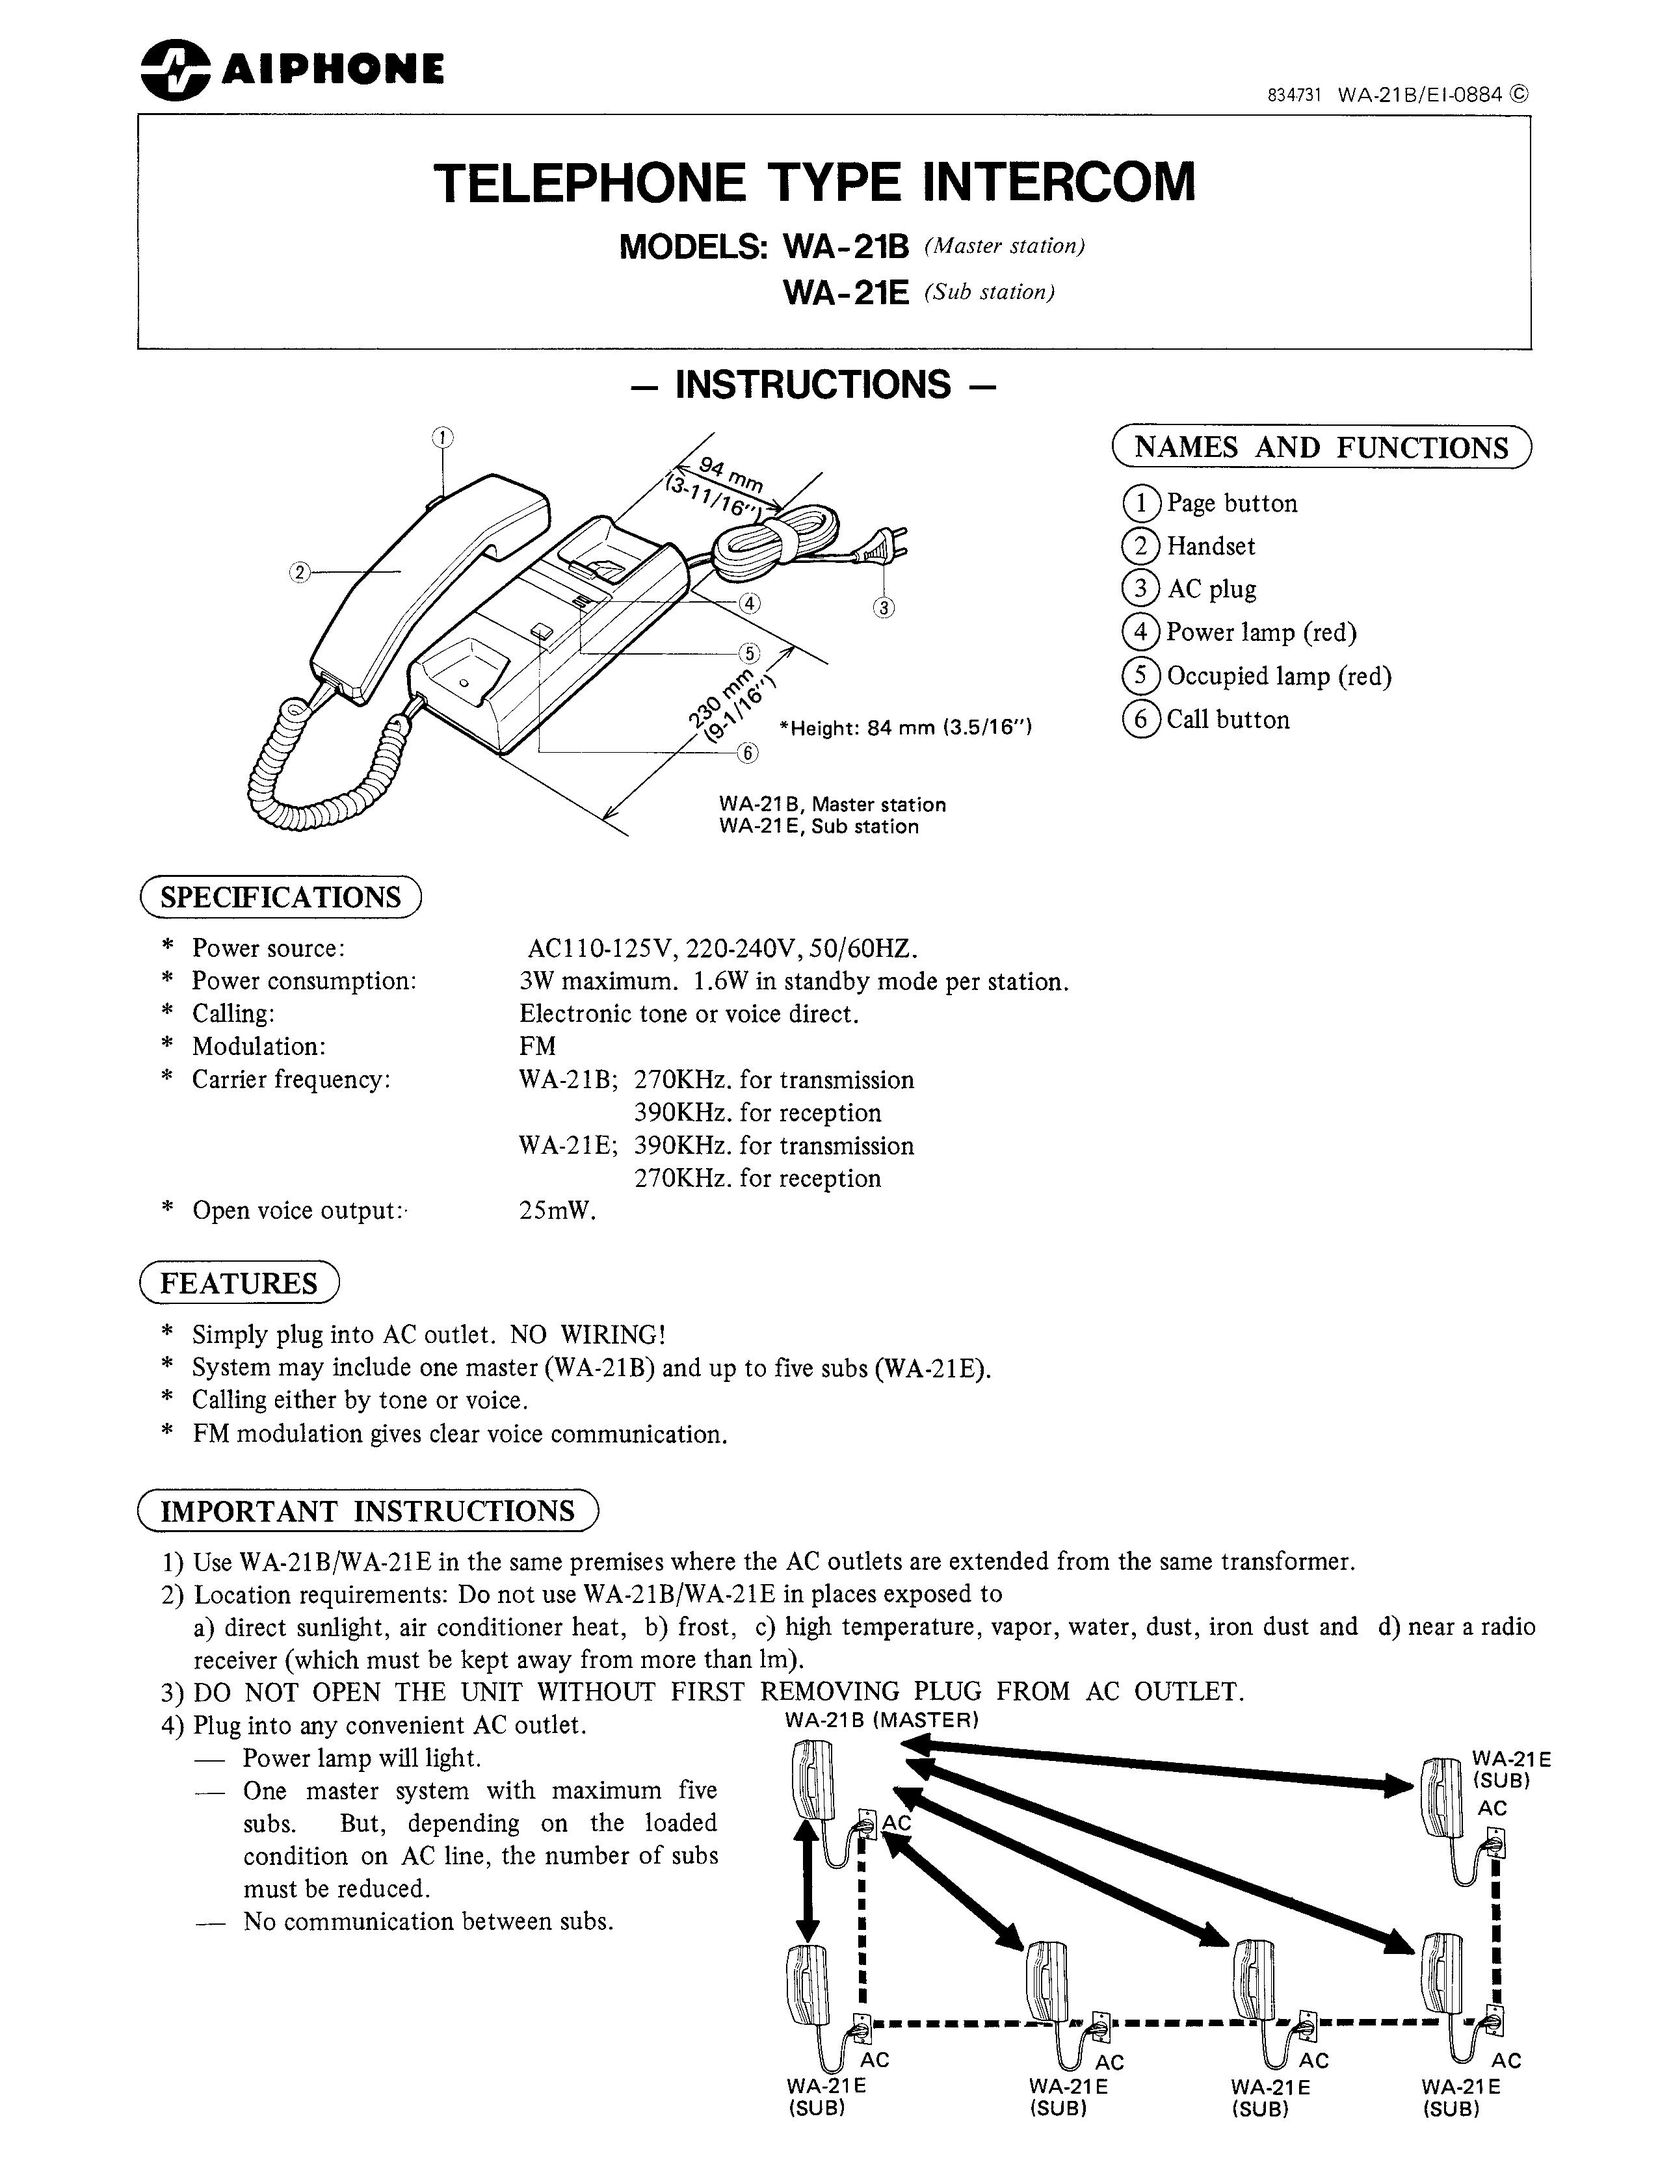 Aiphone WA-21B Telephone User Manual